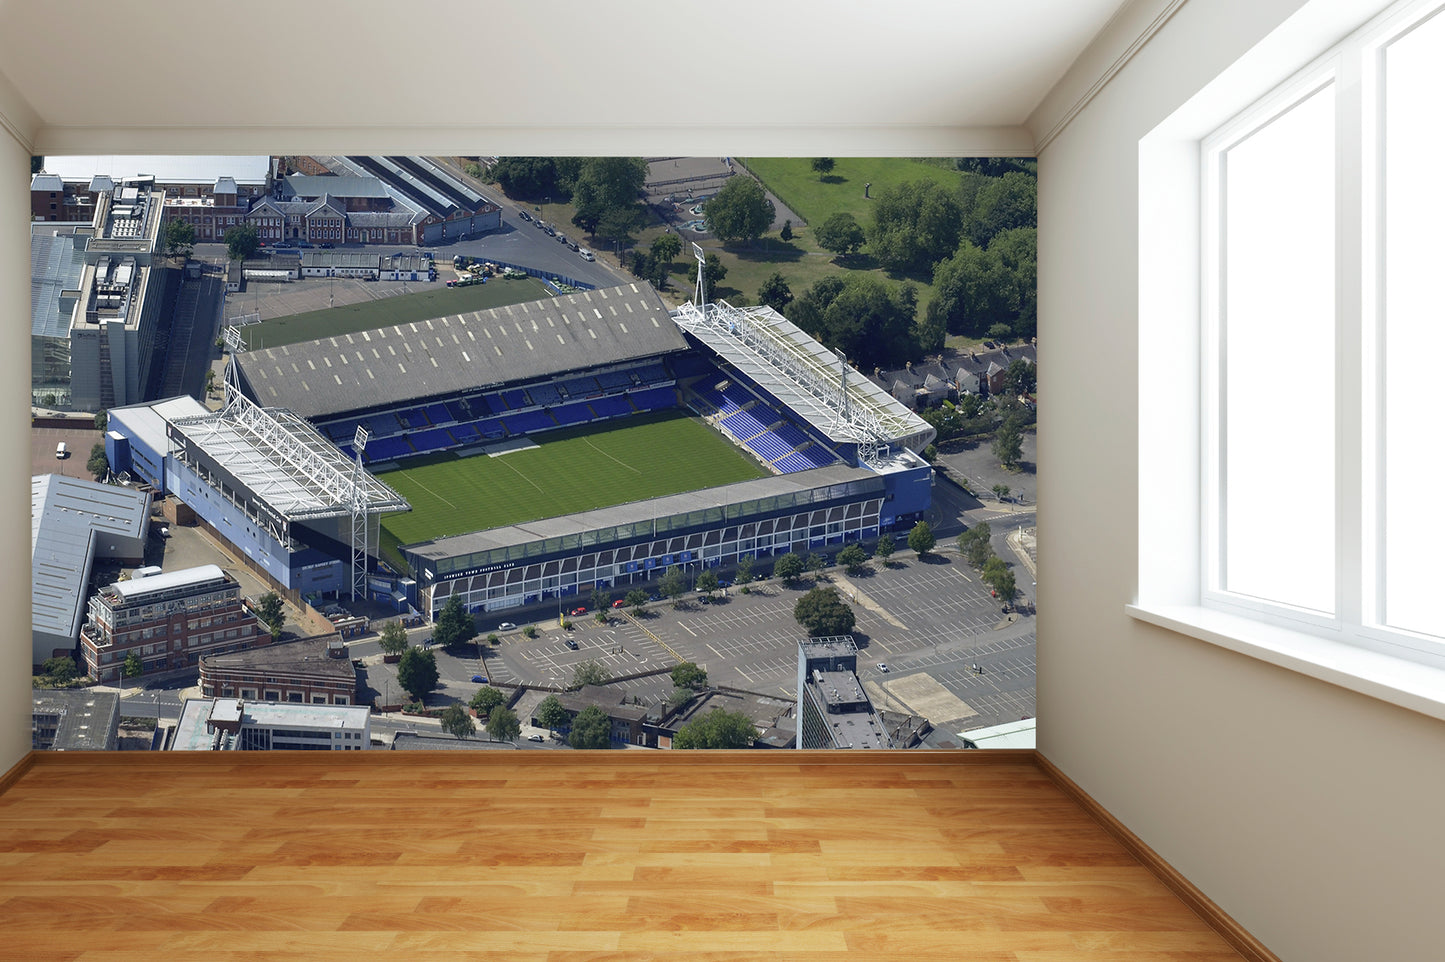 Ipswich Town FC - Portman Road Stadium Full Wall Mural Aerial Image